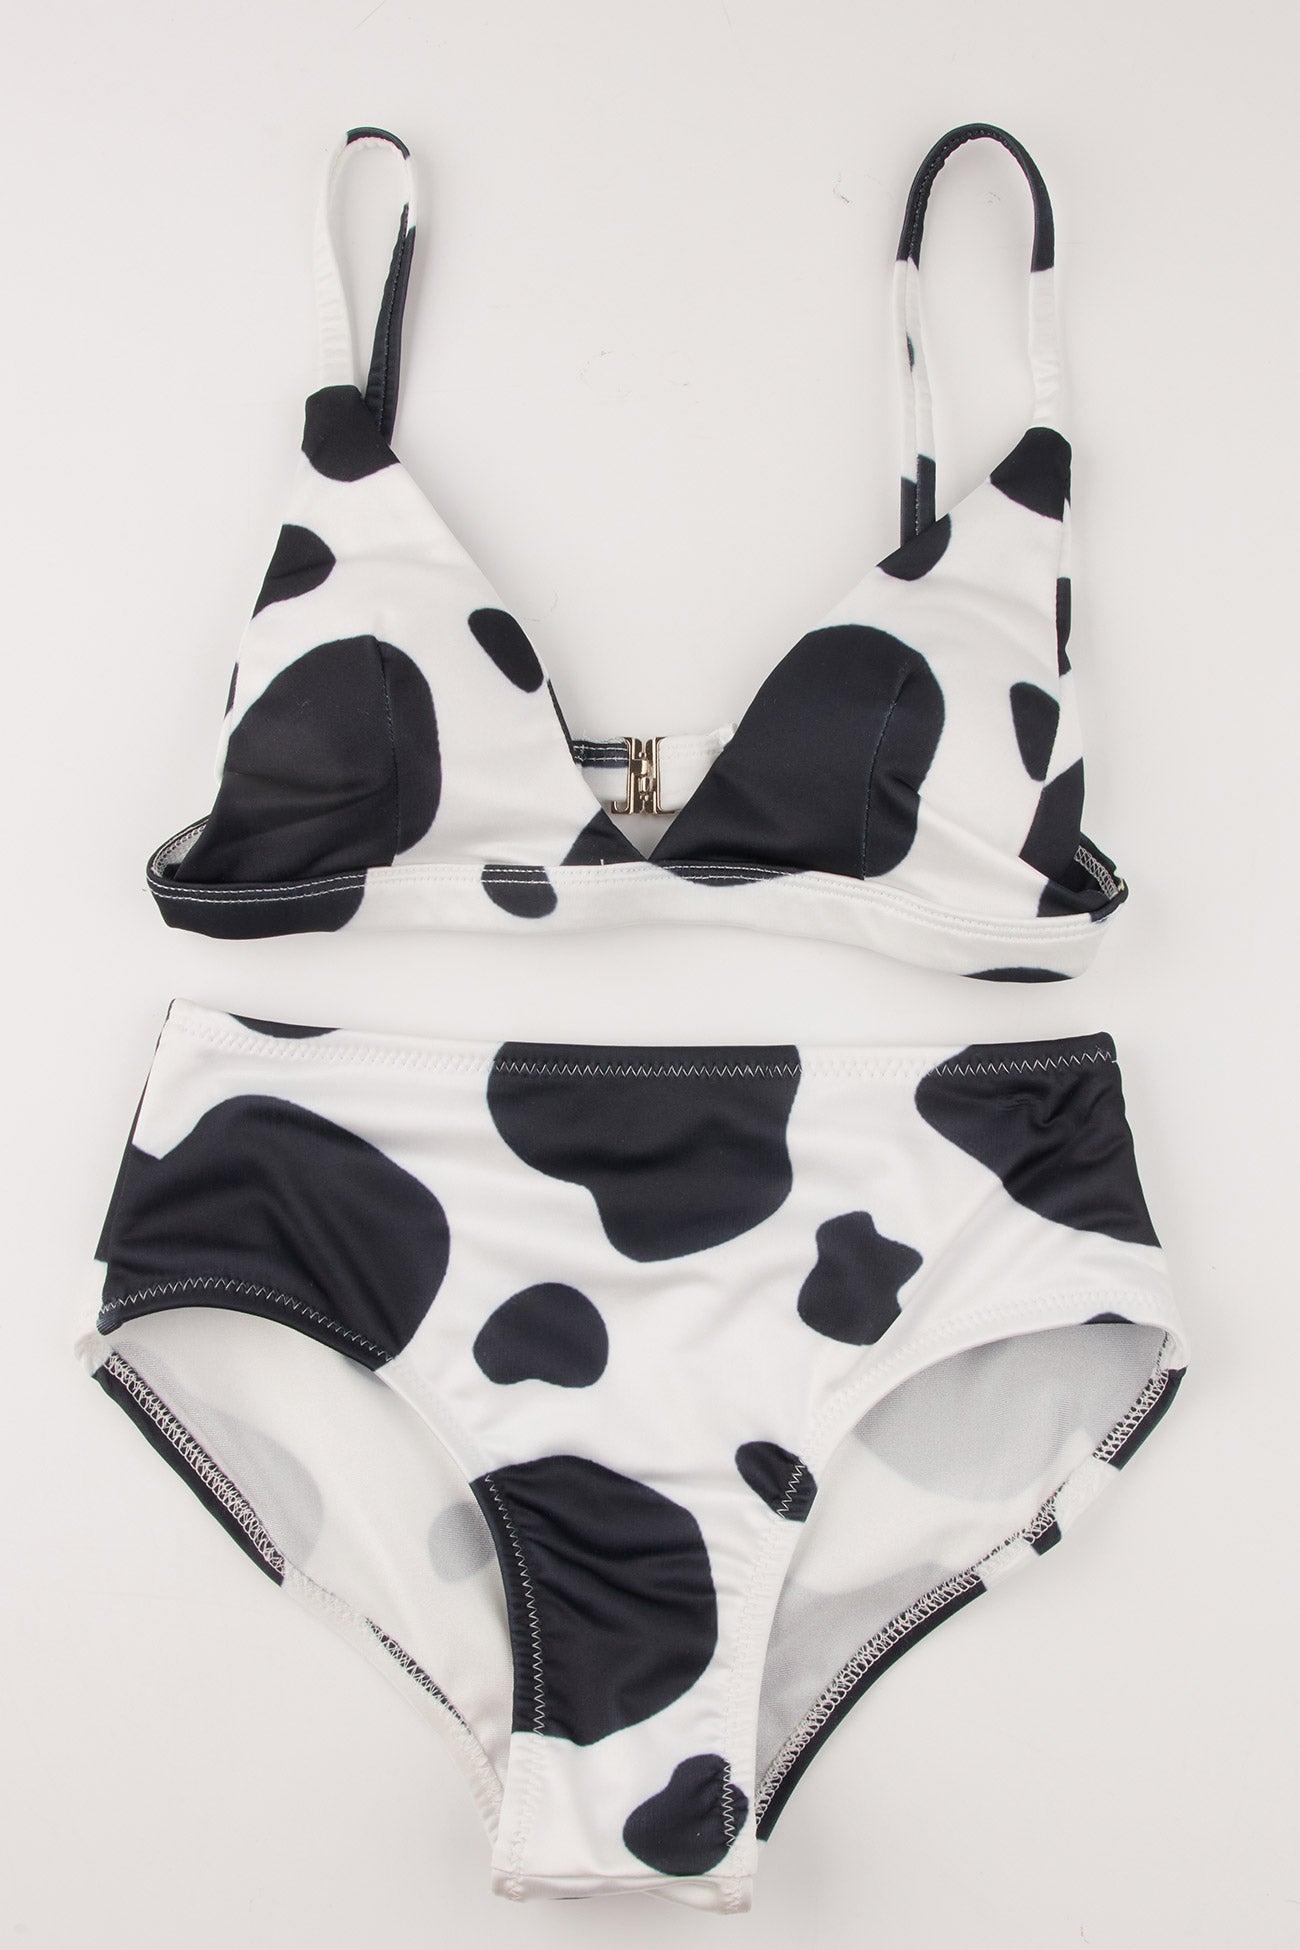 Cow Print Two Piece Bikini Outfits